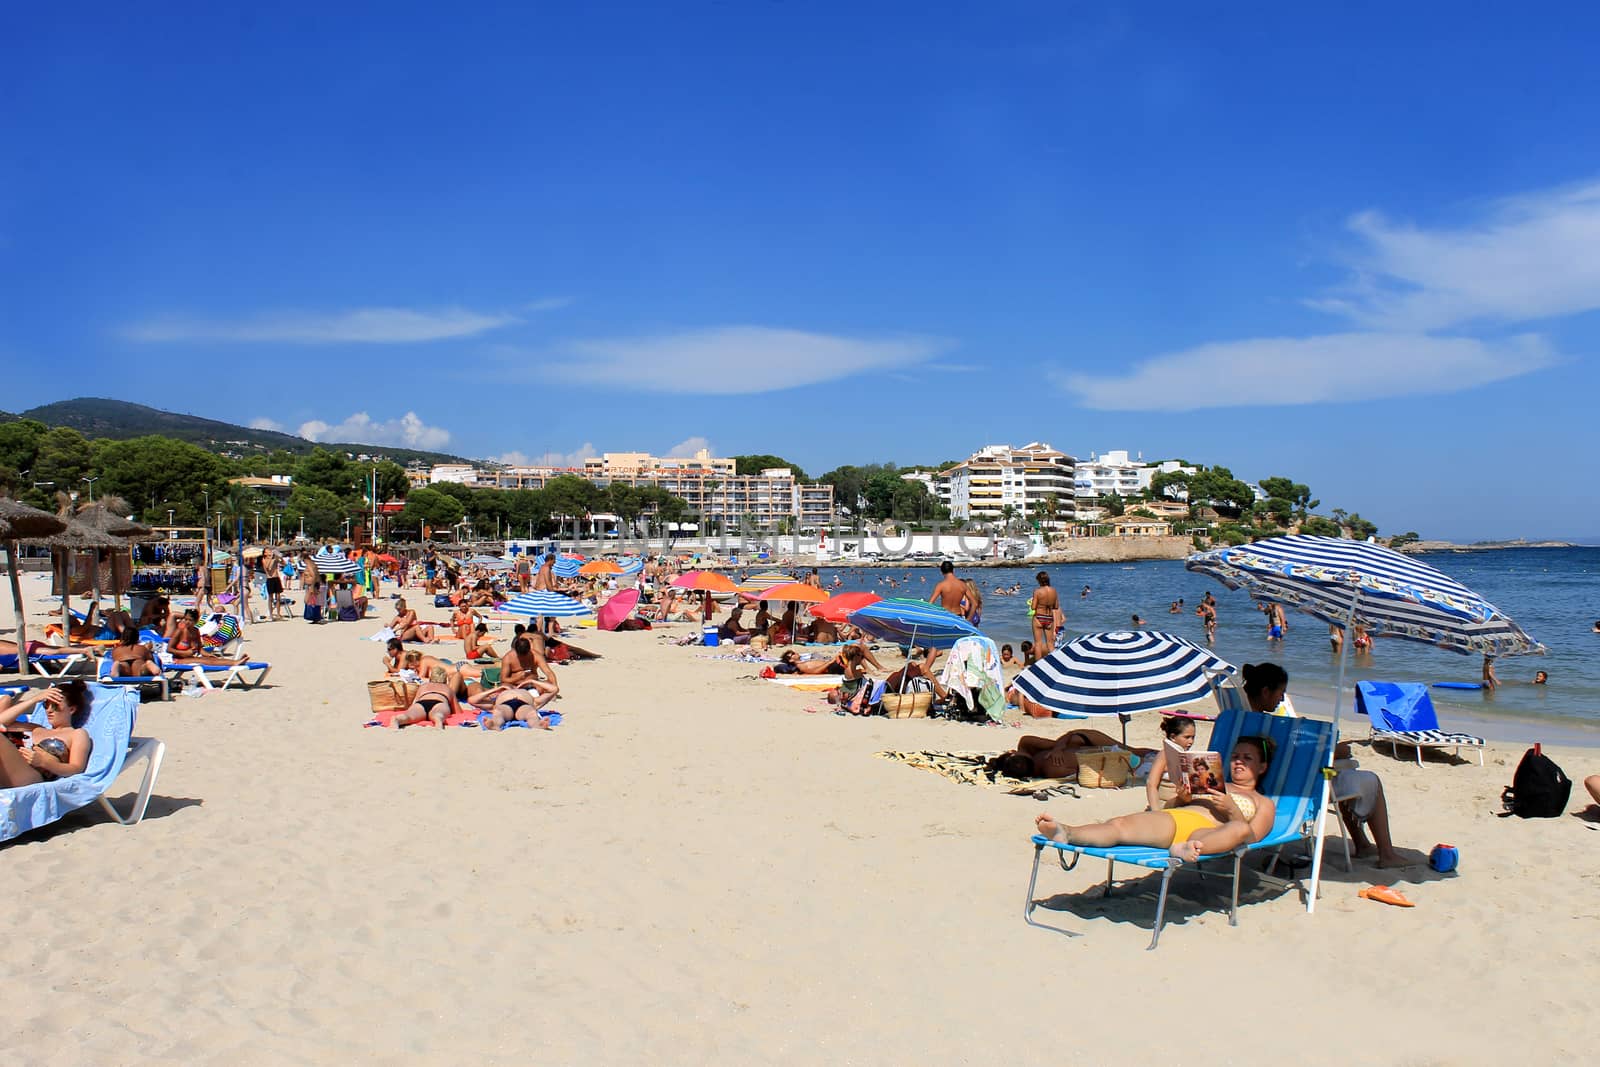 Beach scene on the island of Majorca by speedfighter